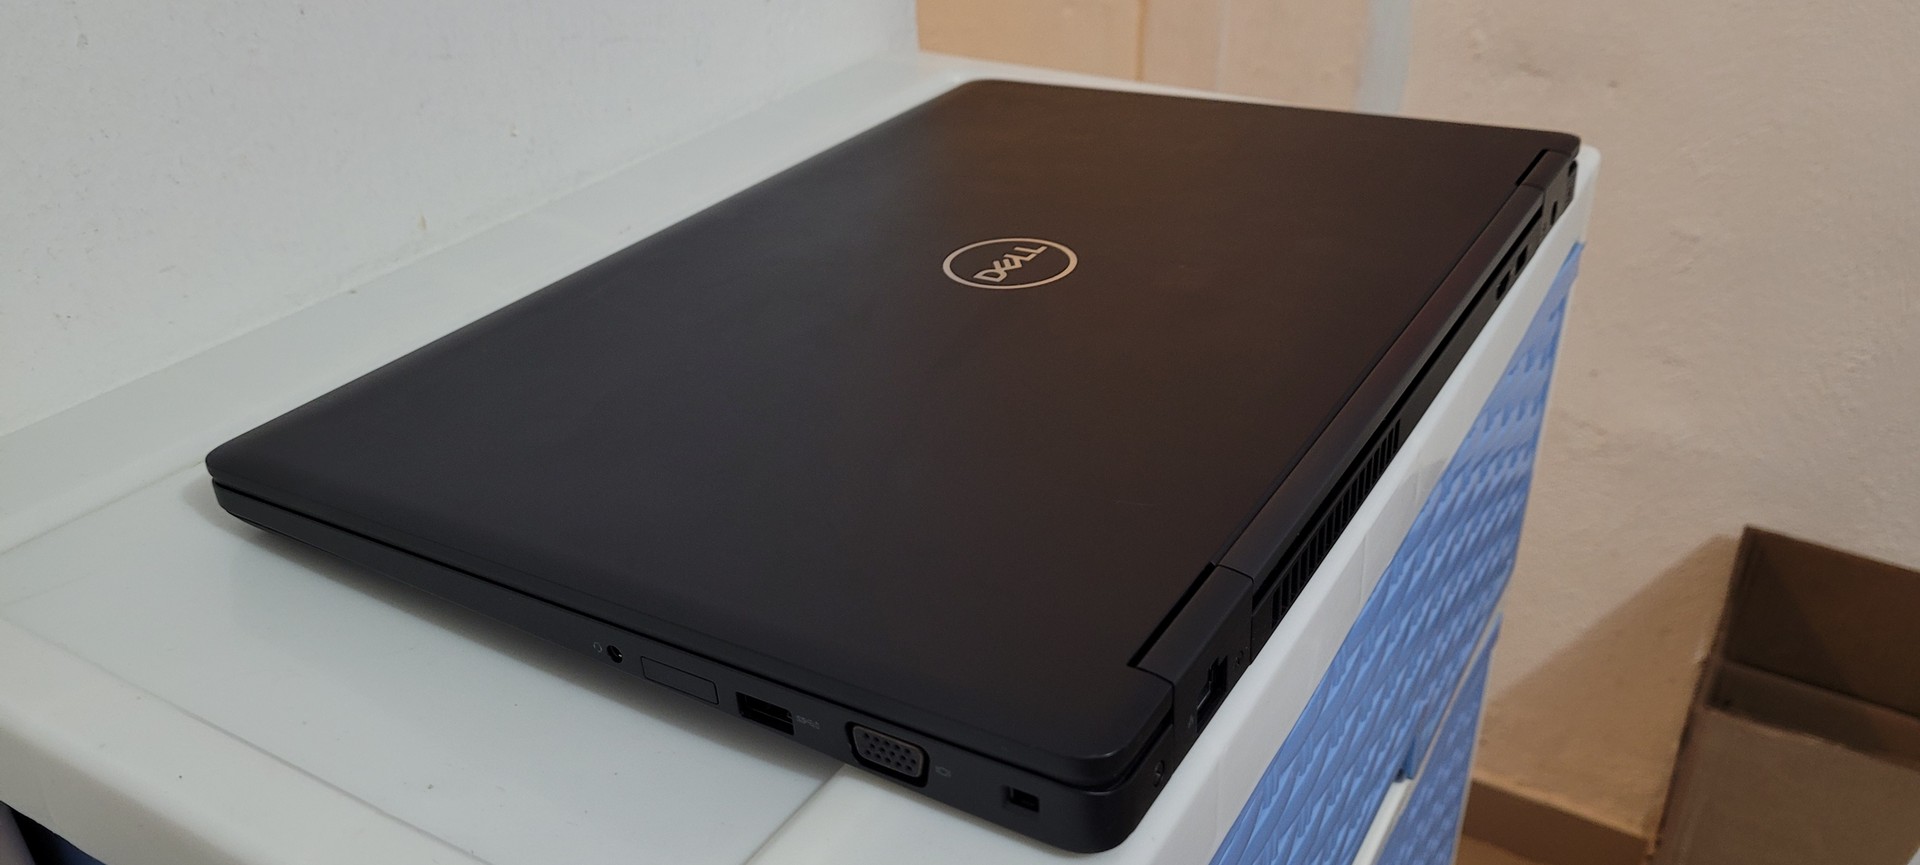 computadoras y laptops - Dell 5580 17 Pulg Core i5 7ma Gen Ram 12gb ddr4 Disco 256gb SSD Nvidea 6gb 2